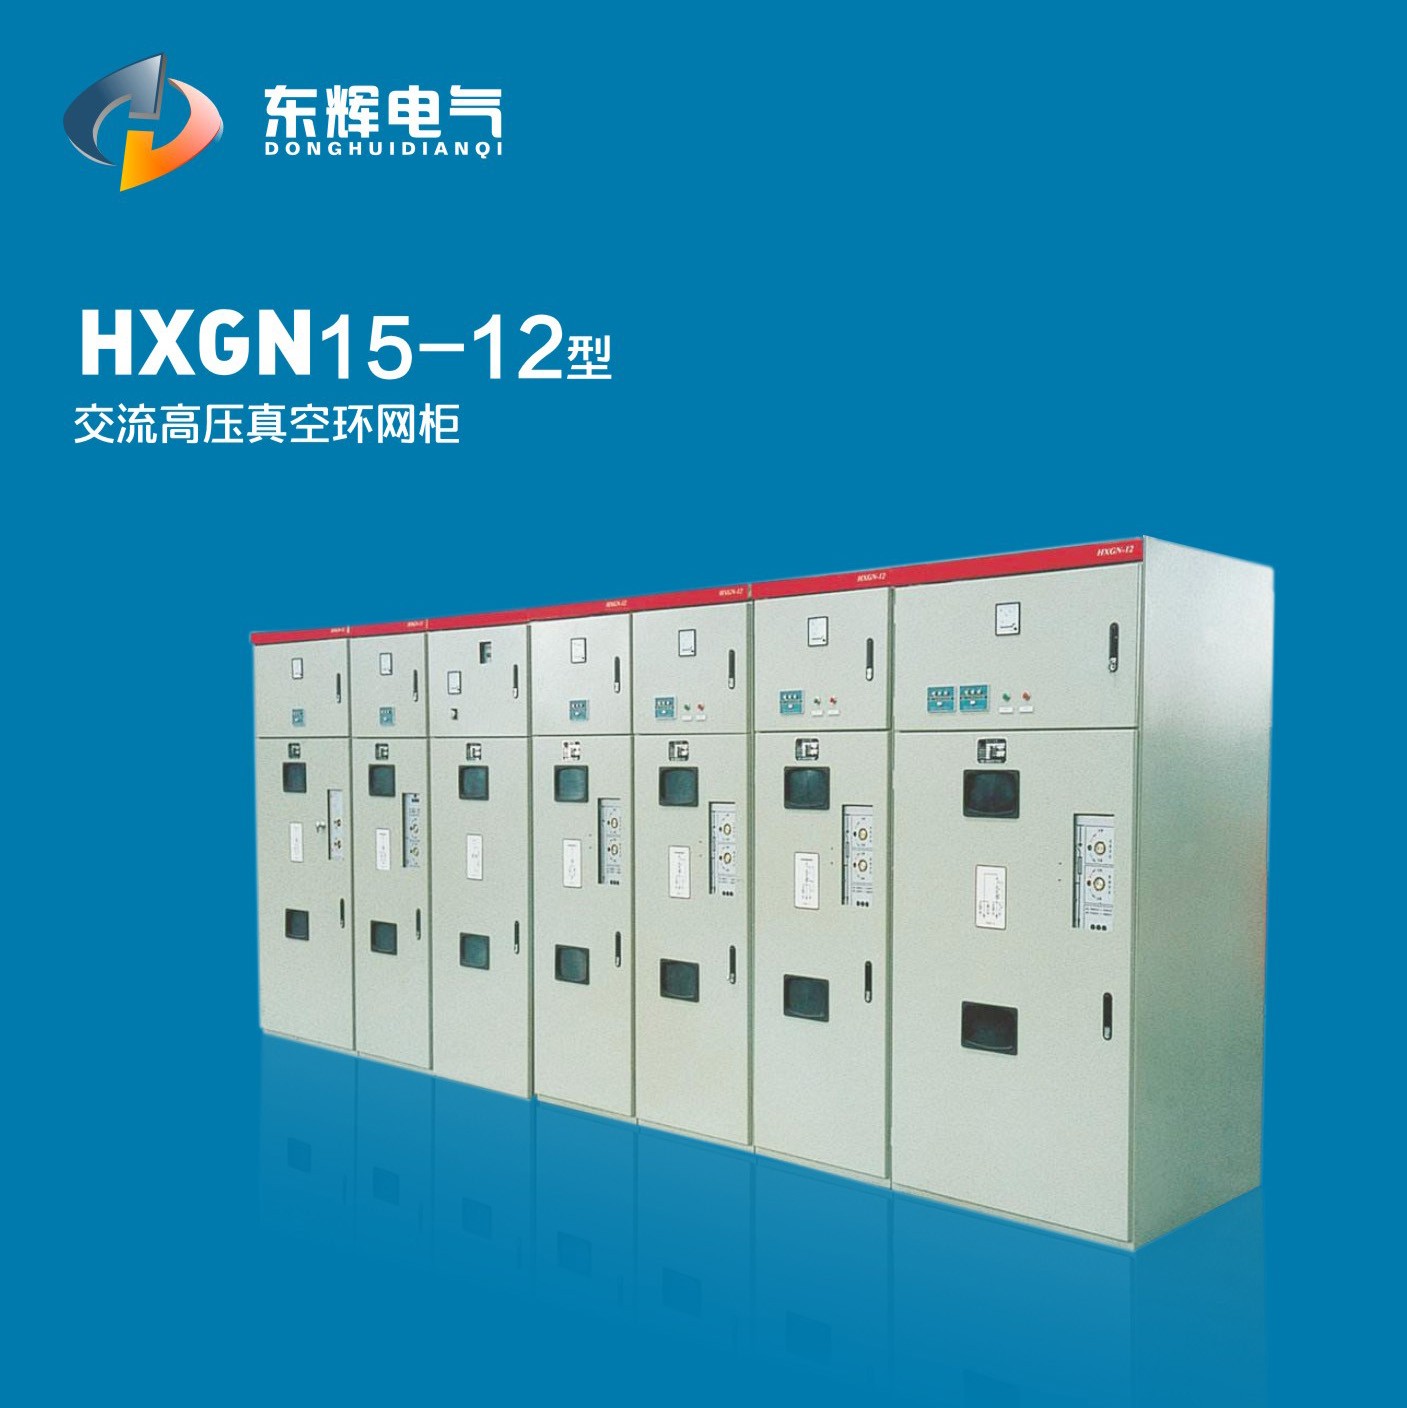 XGN15-12III、III型環網柜基本組件